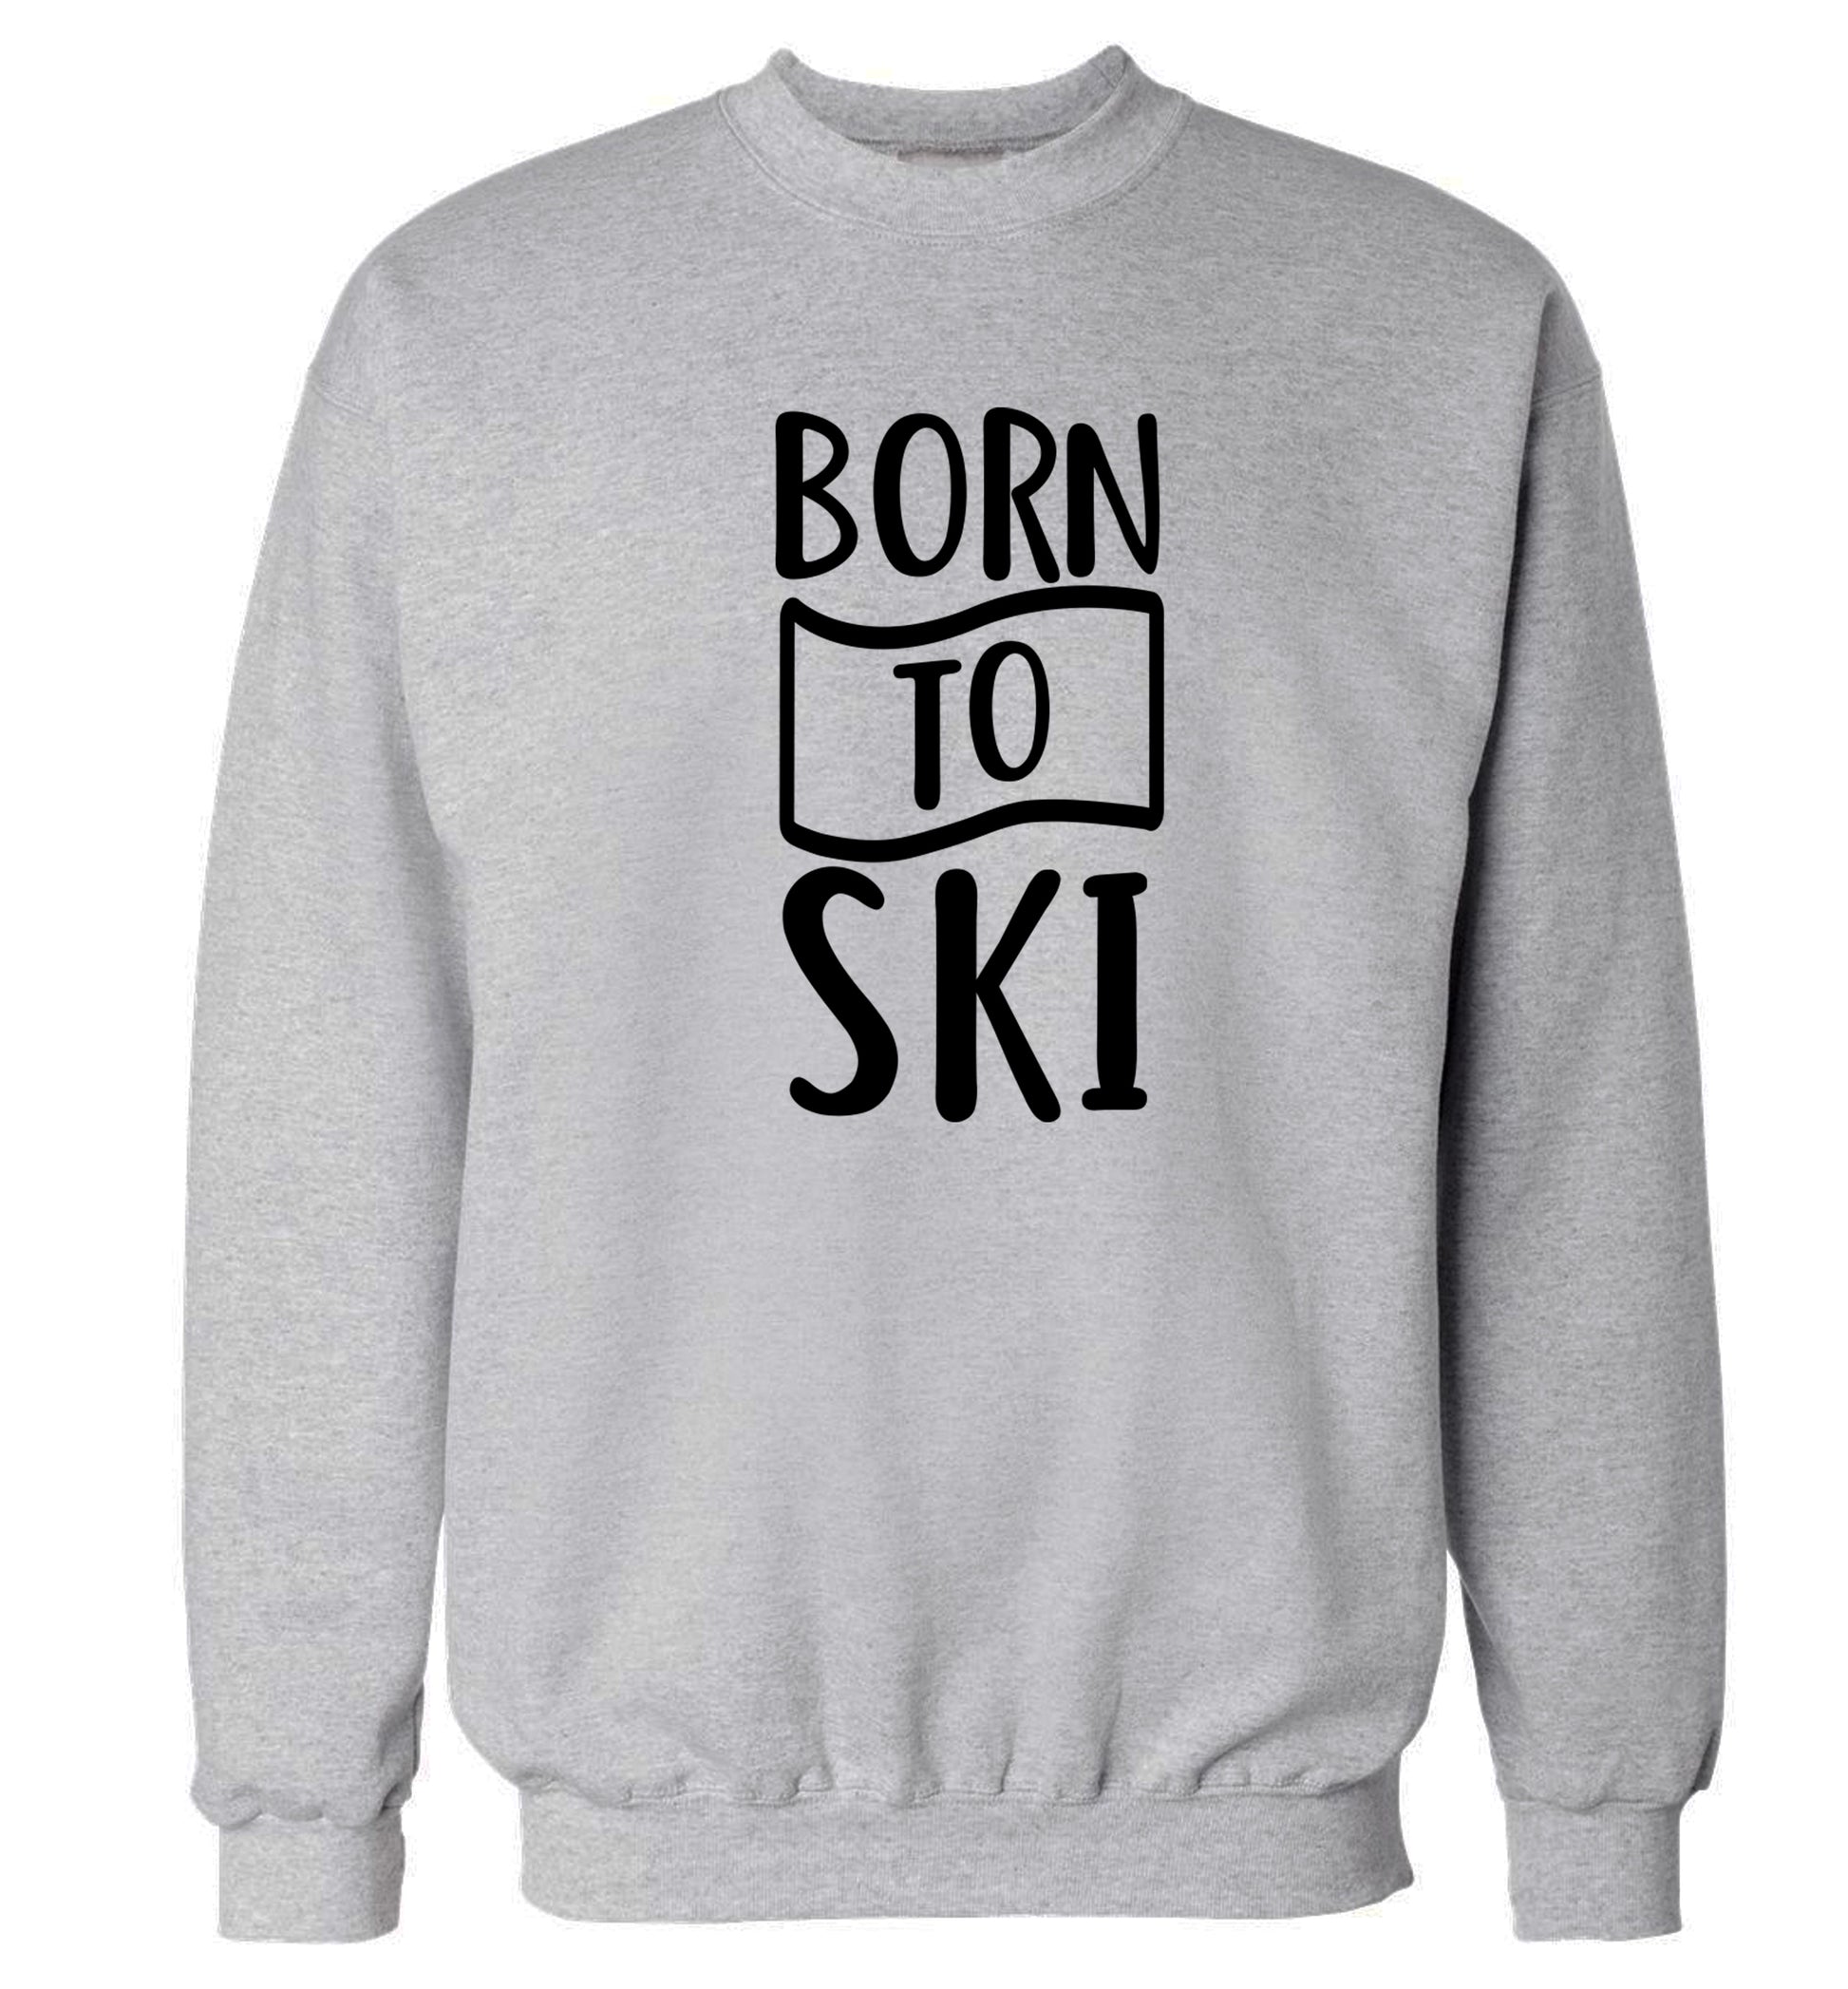 Born to ski Adult's unisexgrey Sweater 2XL